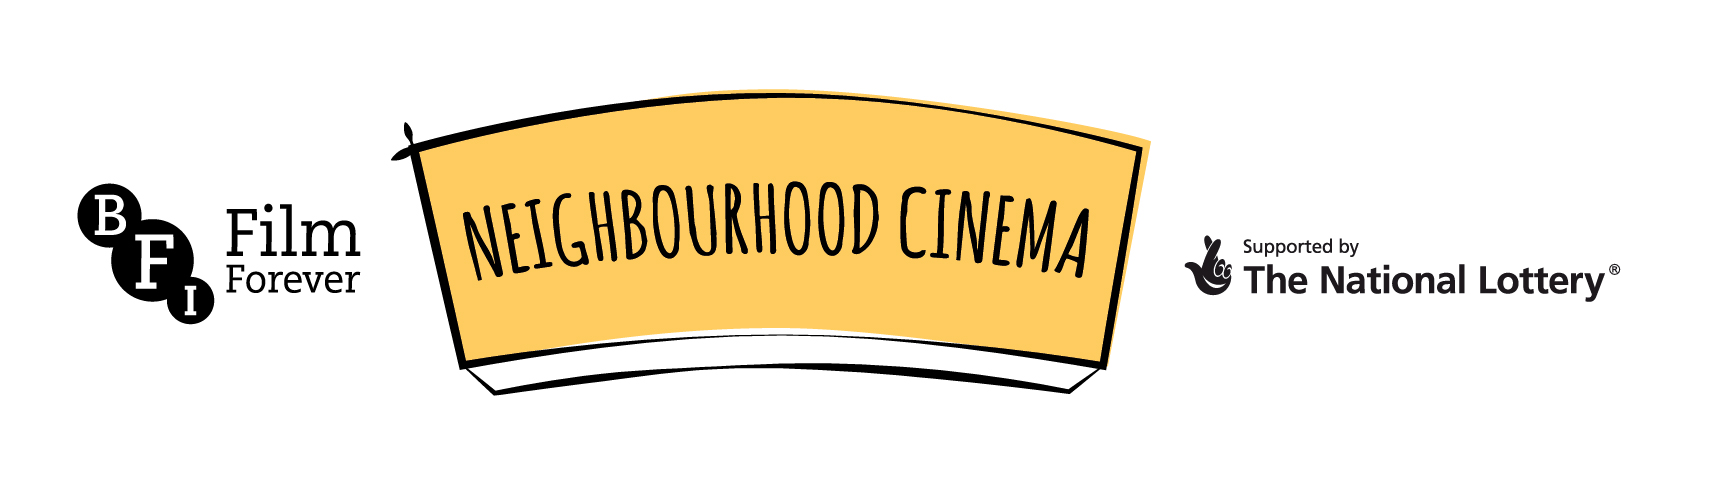 BFI Neighbourhood Cinema